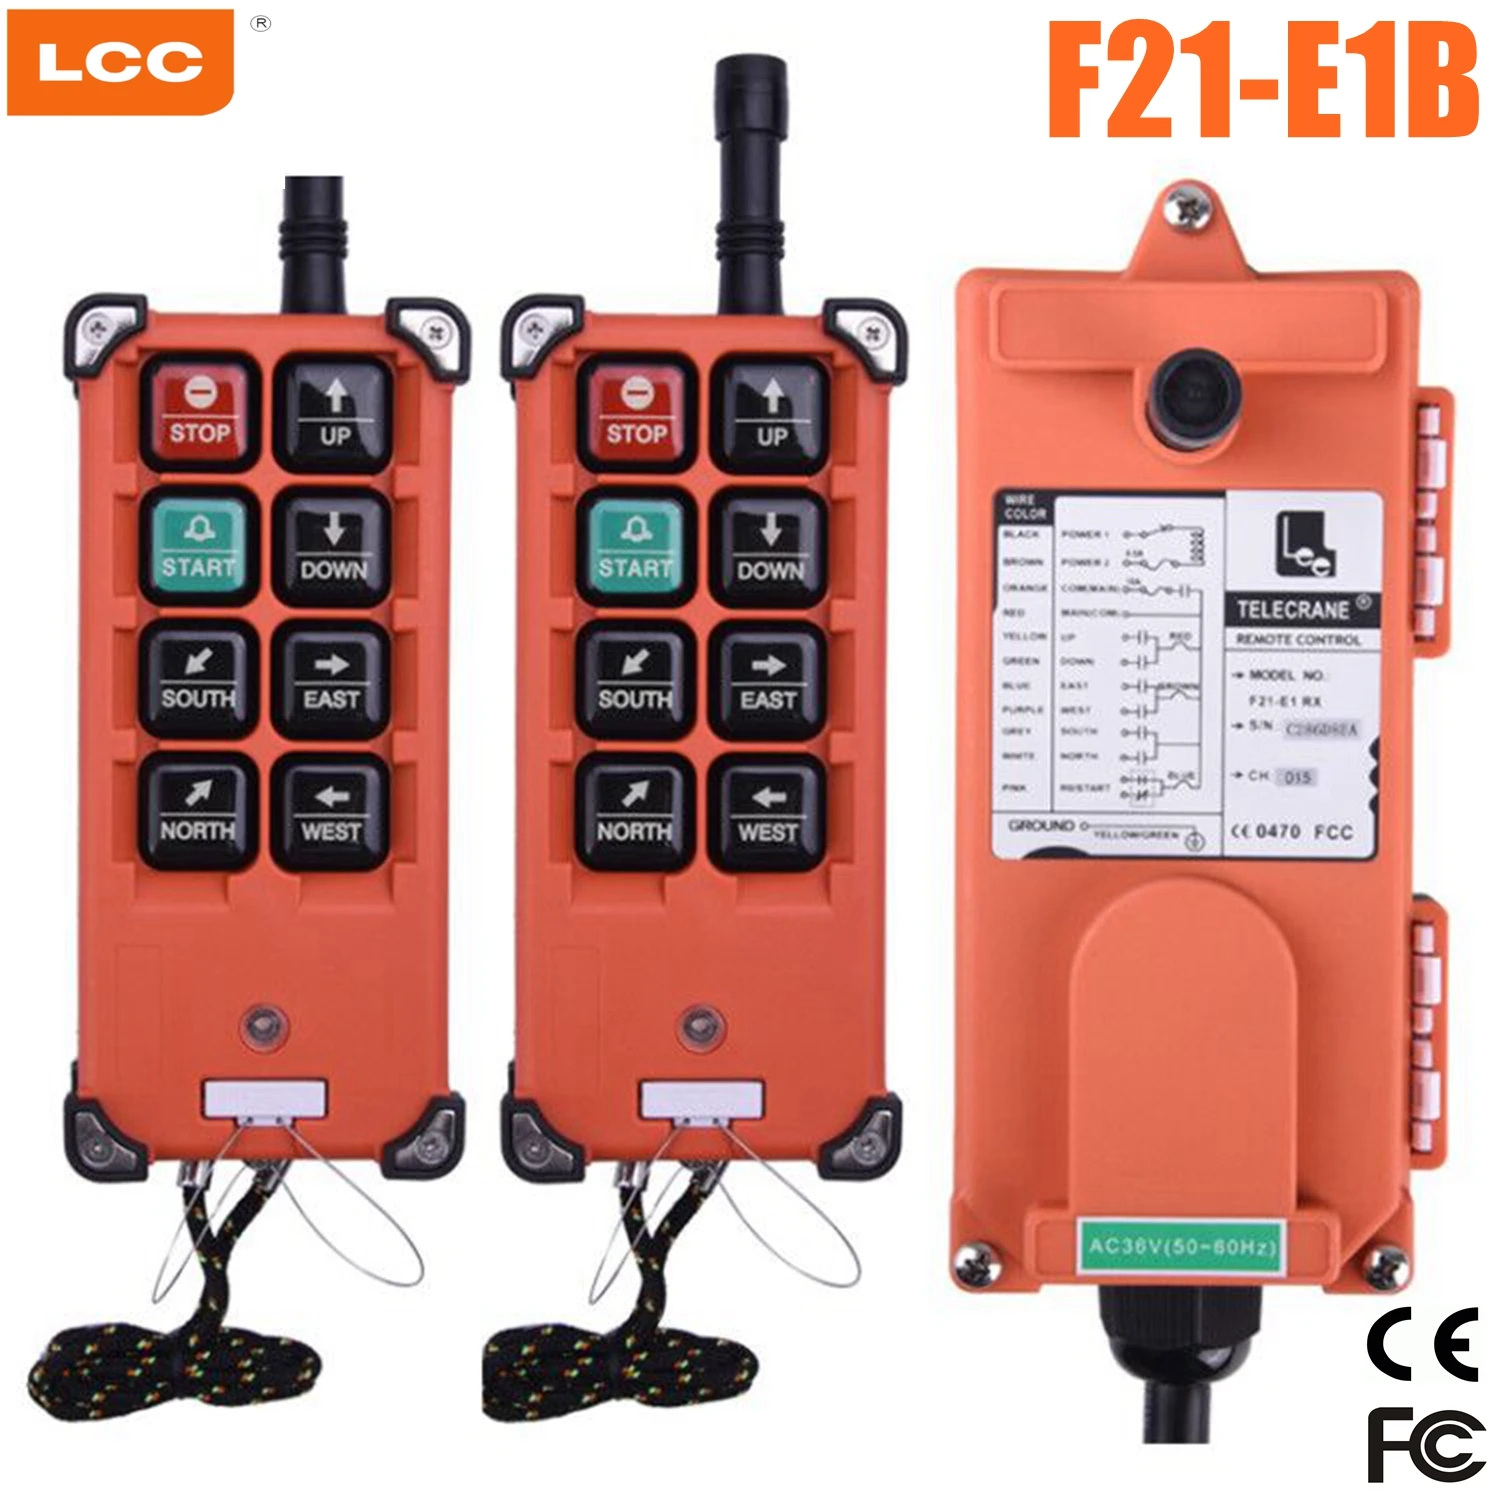 

F21-E1B Electric Hoist Crane Controller Single Speed 8 Buttons IP65 Waterproof 12v 24v 36v Industrial Remote Control